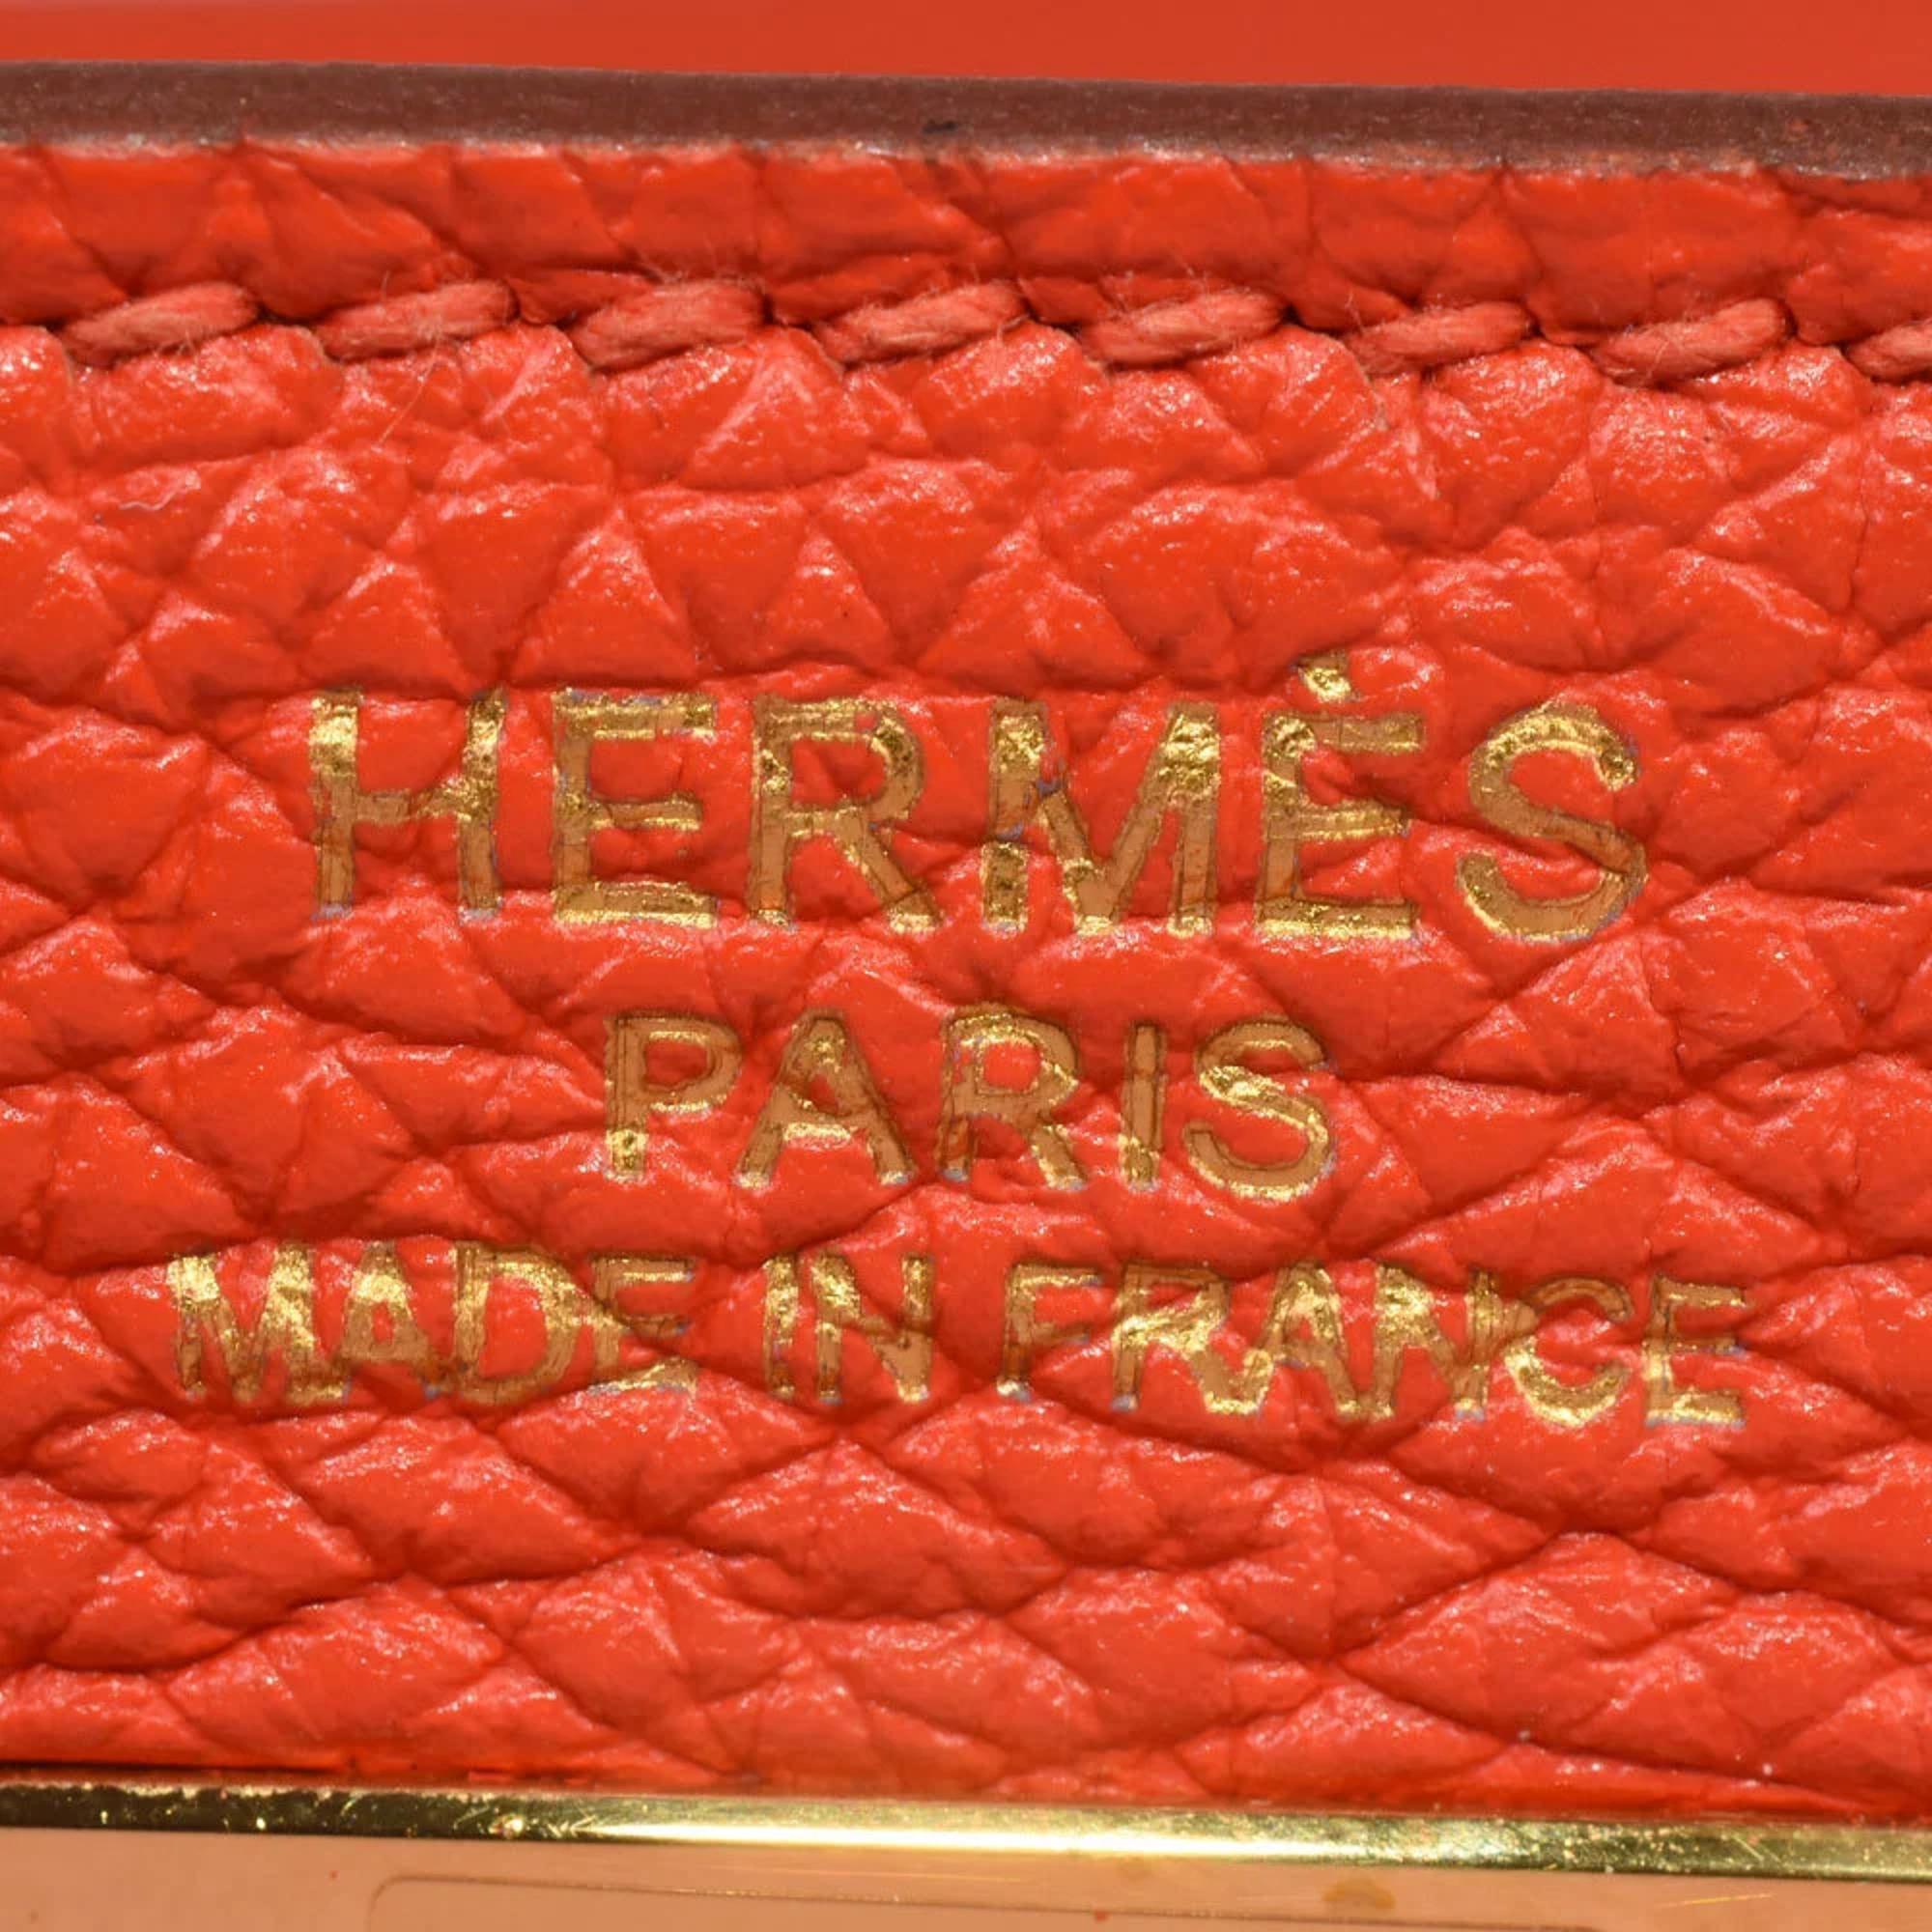 Hermes Kelly 35 Inner Sewing Capucines Togo Q Engraved (manufactured In 2013) Handbag